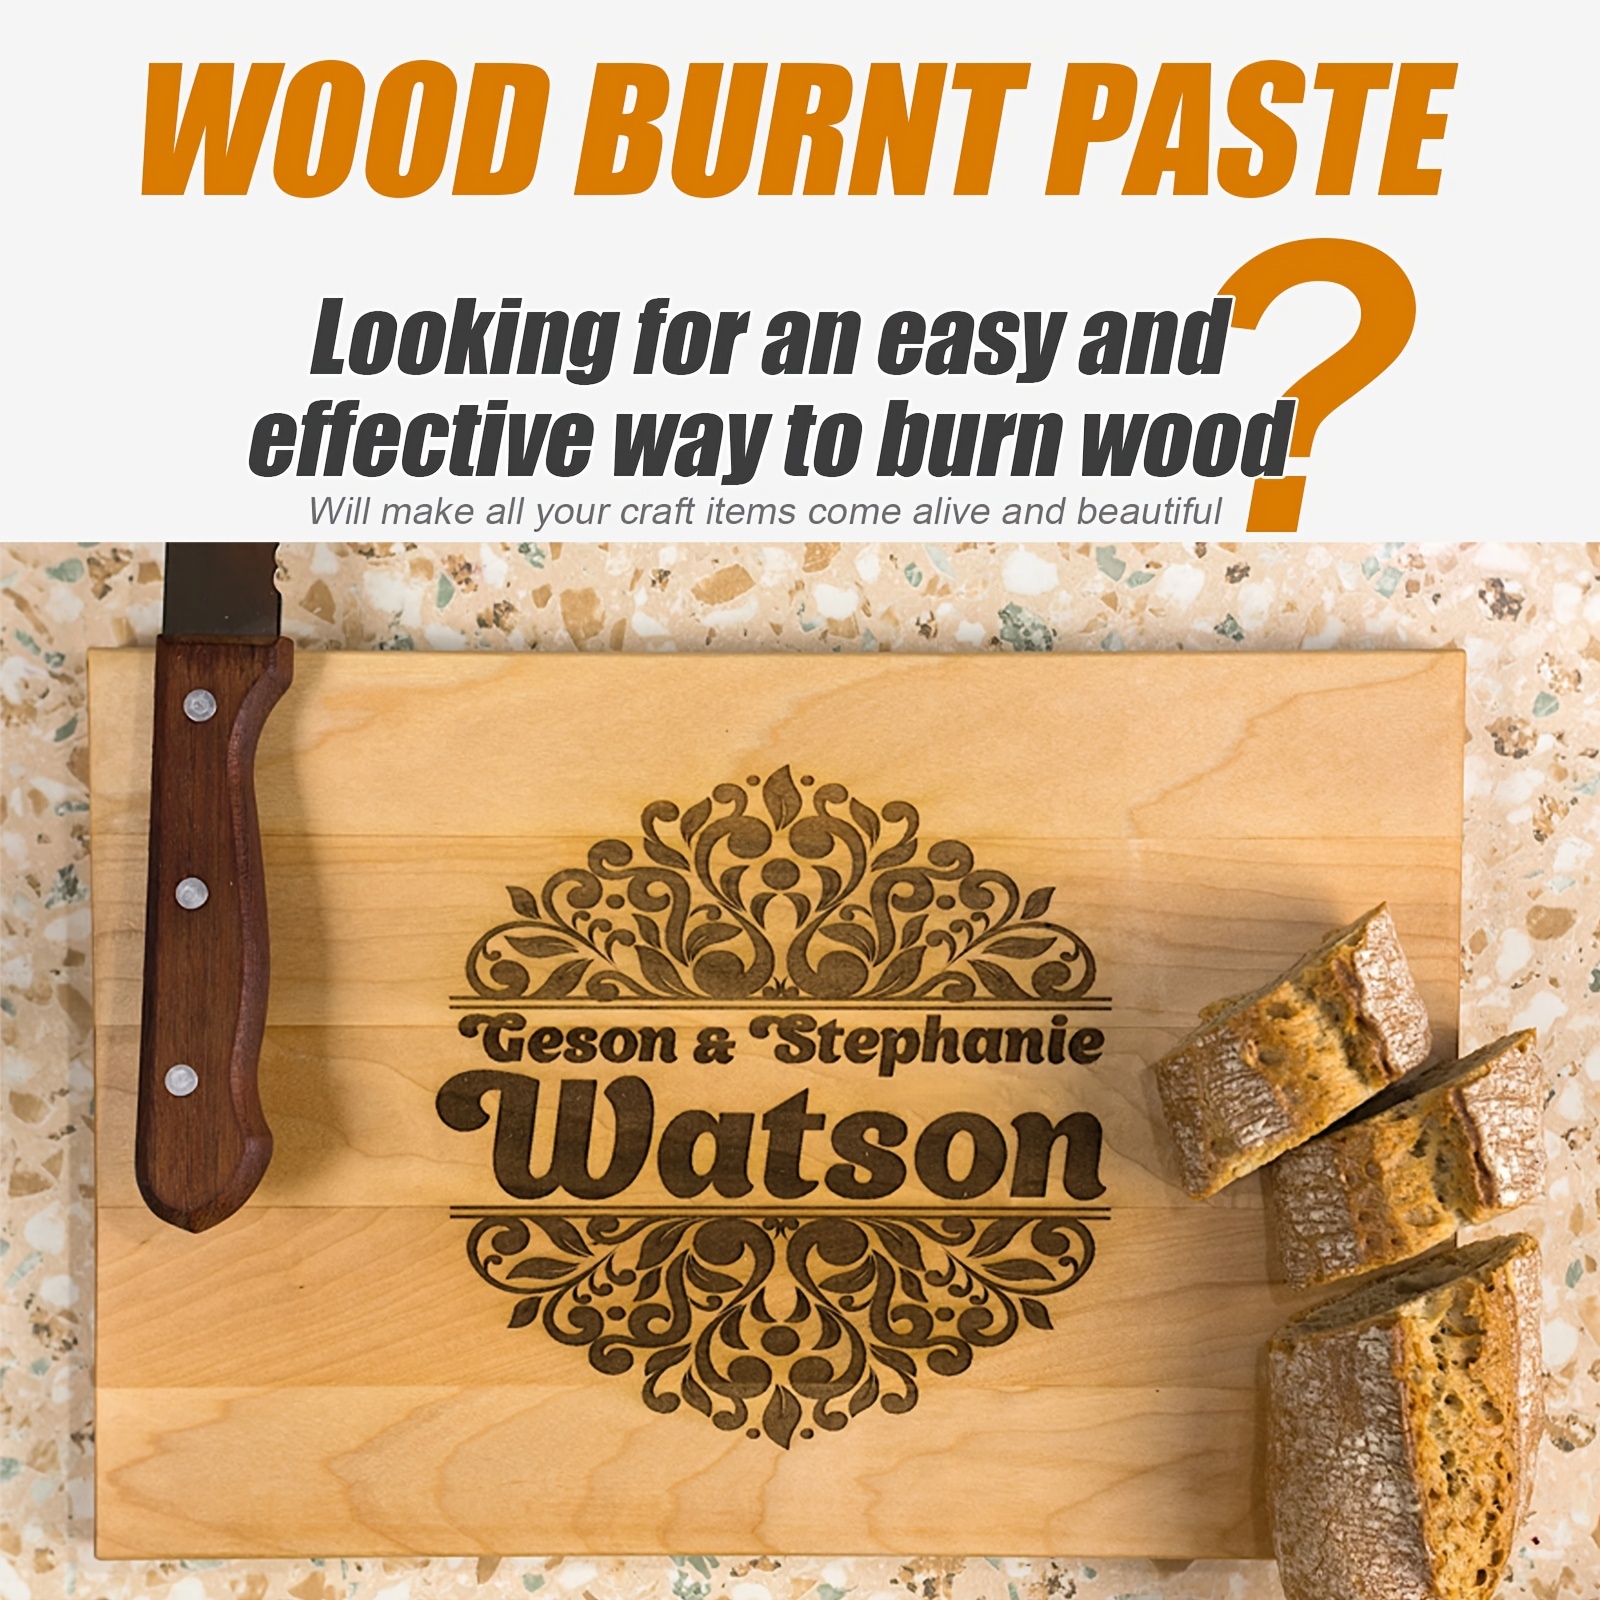 Wood Burn Paste Wood Burn With Heat Easy Wood Burn Tool Torch